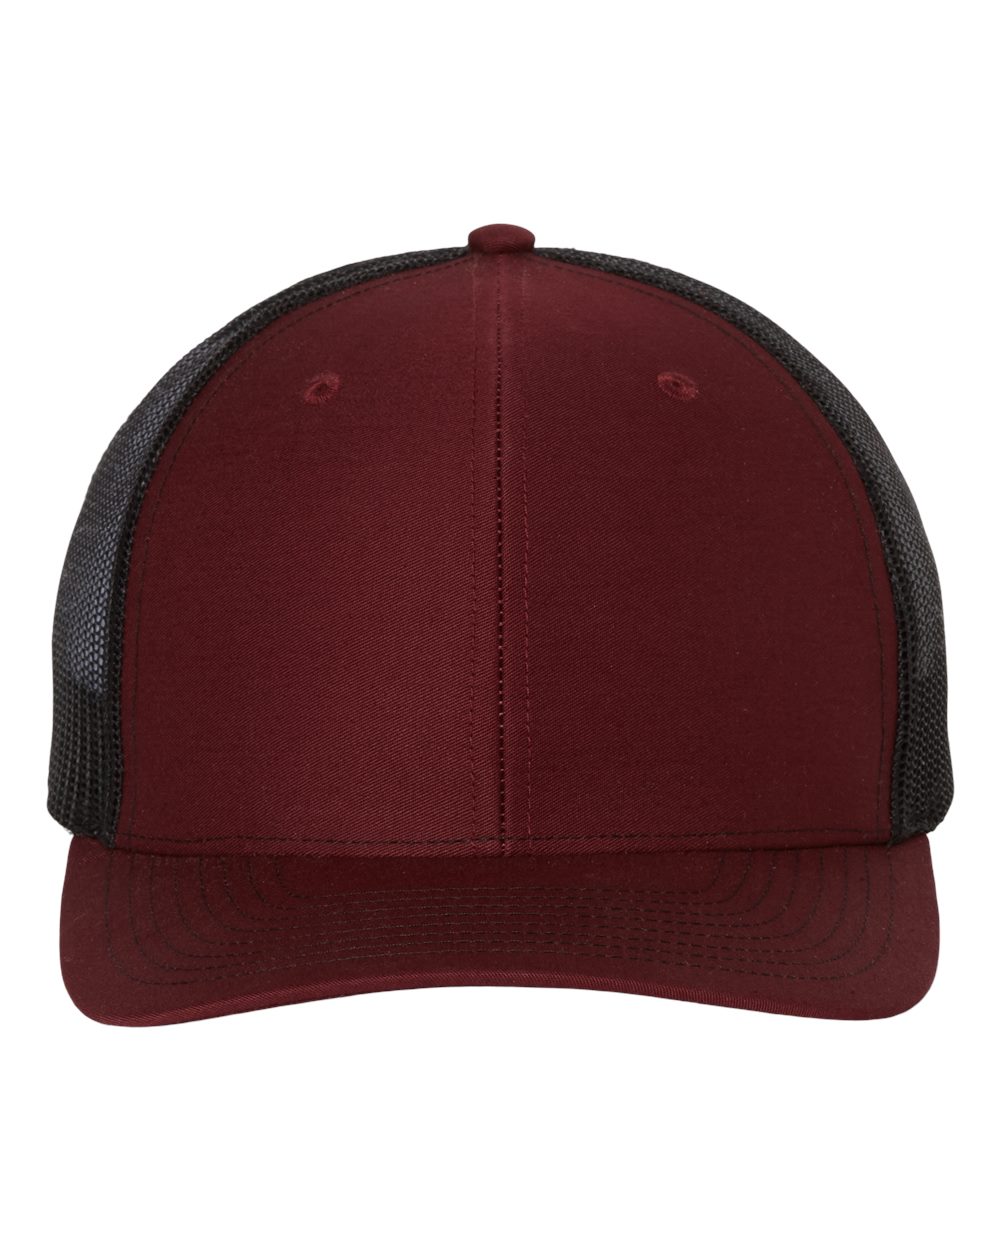 Richardson Snapback Trucker Hat (112) in Cardinal/Black